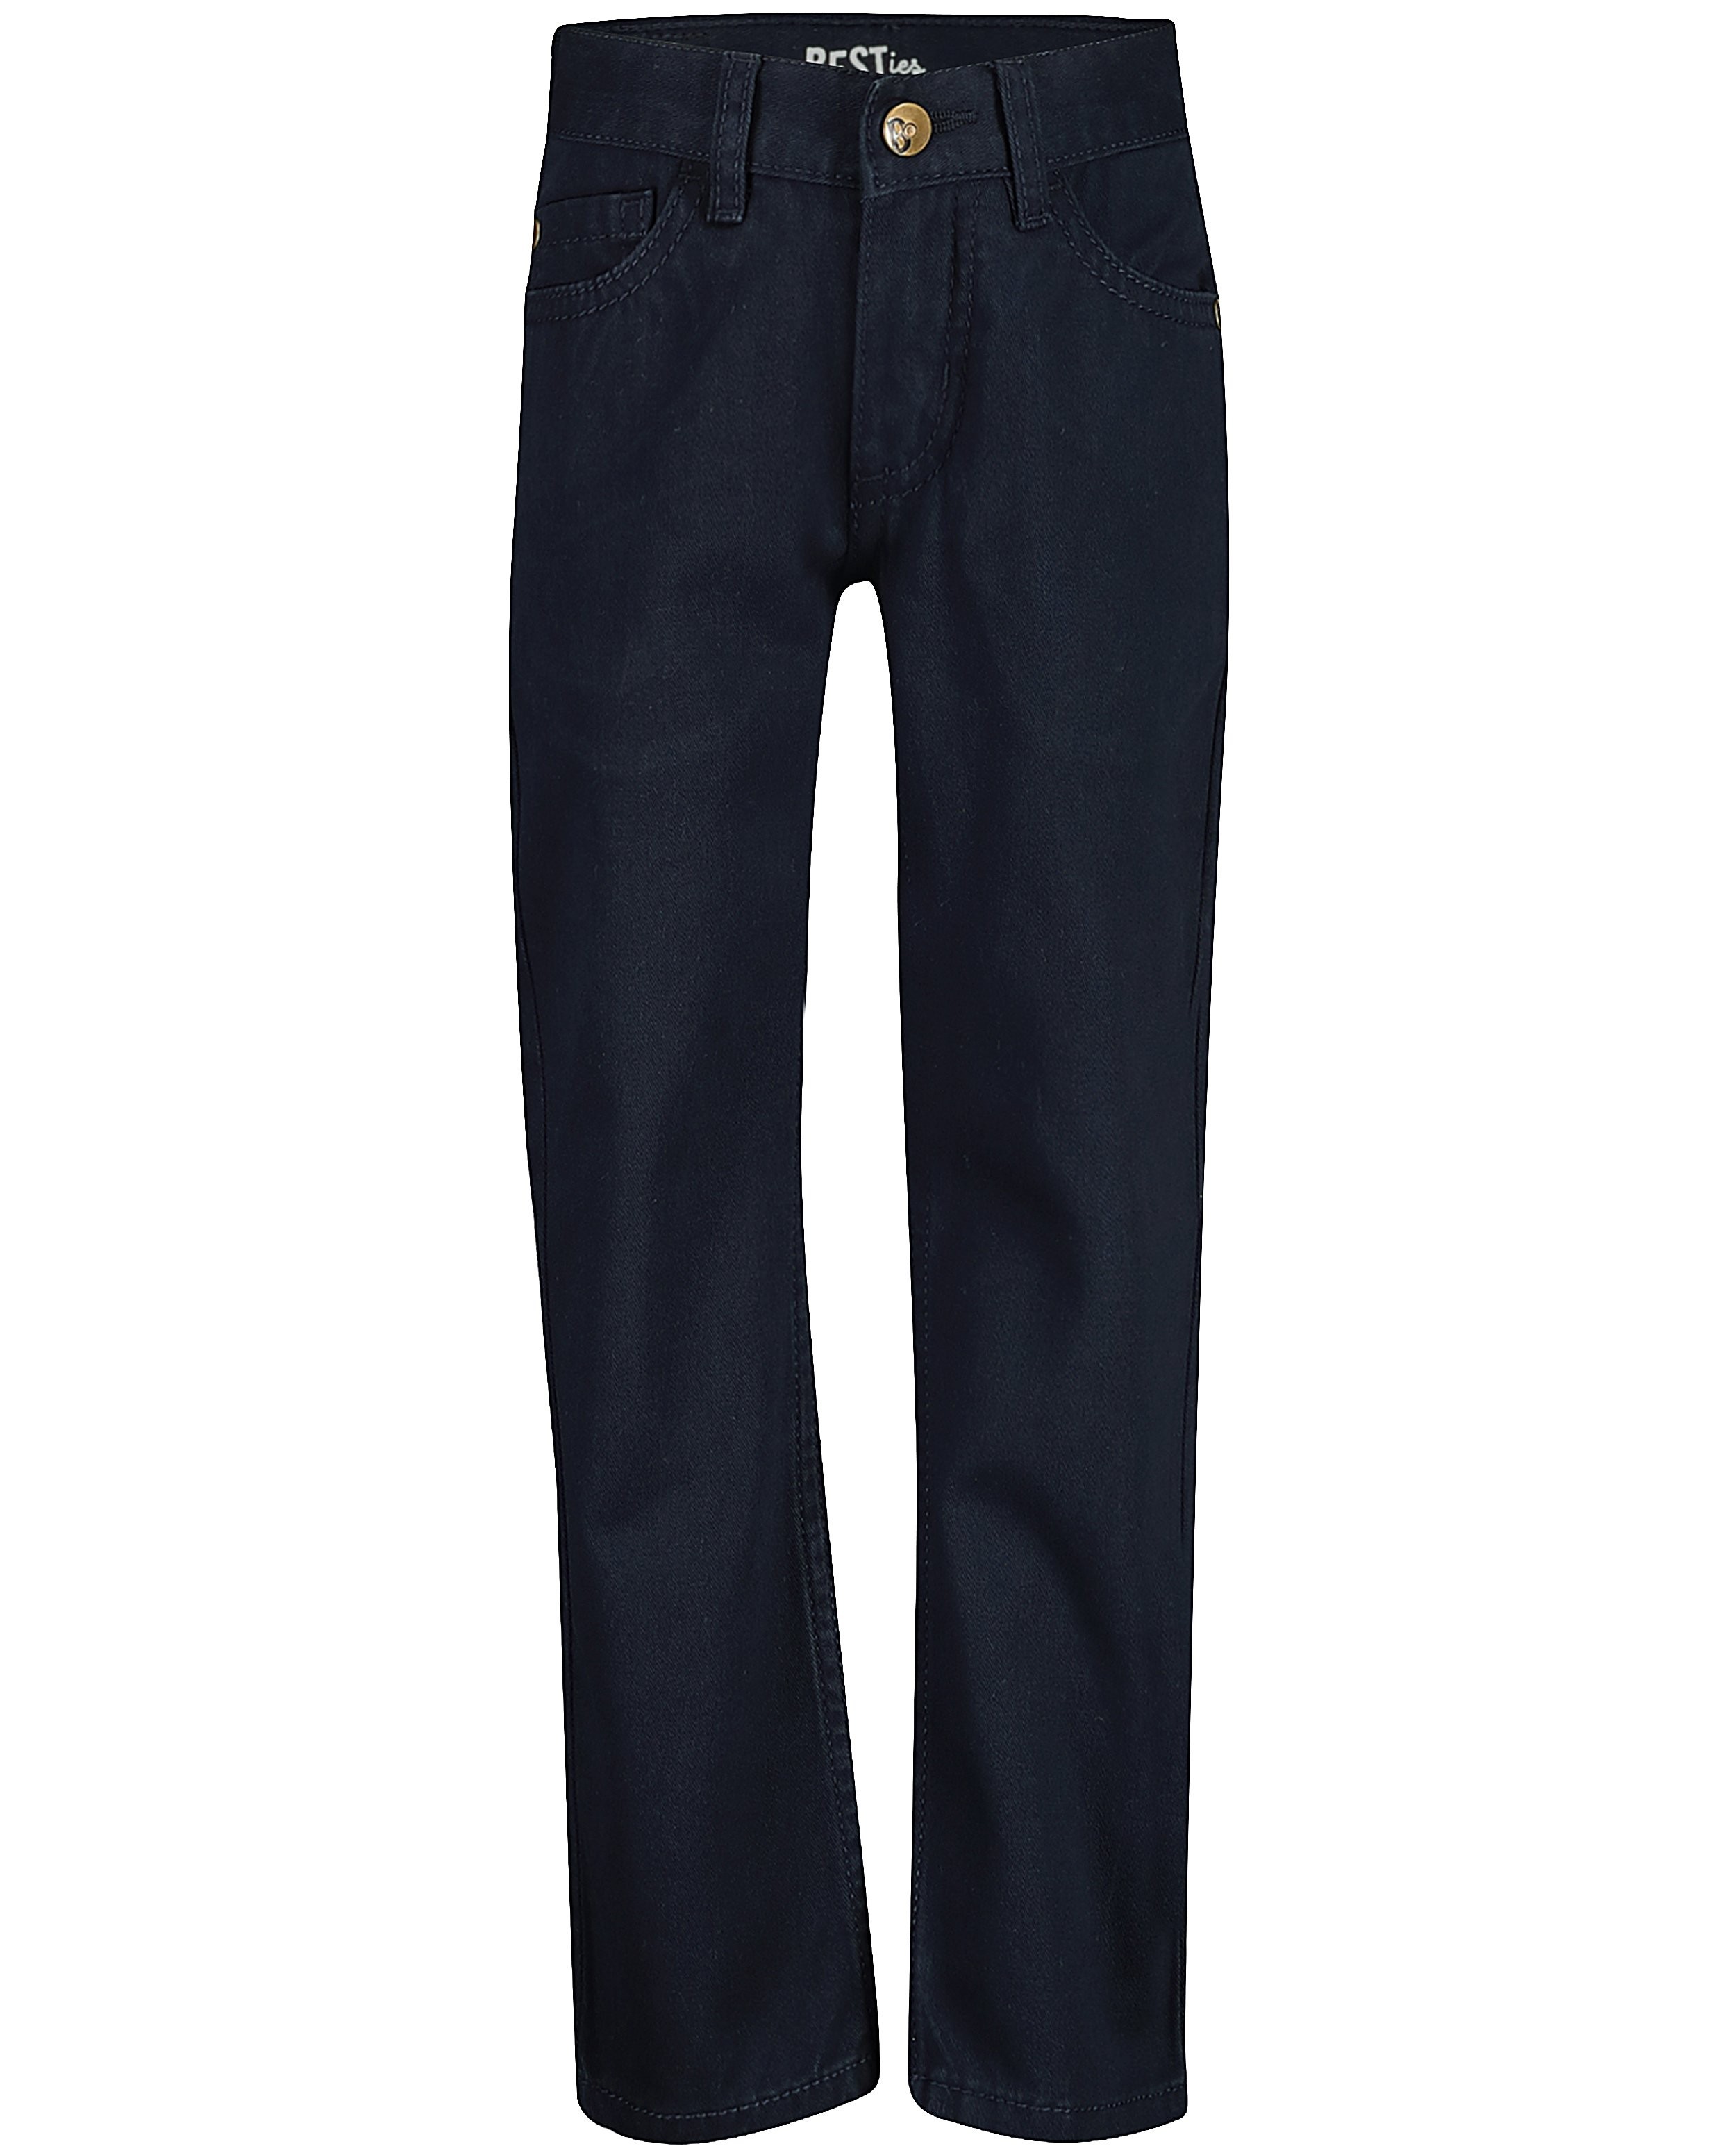 Pantalons - Jeans slim SIMON BESTies, 2-7 ans